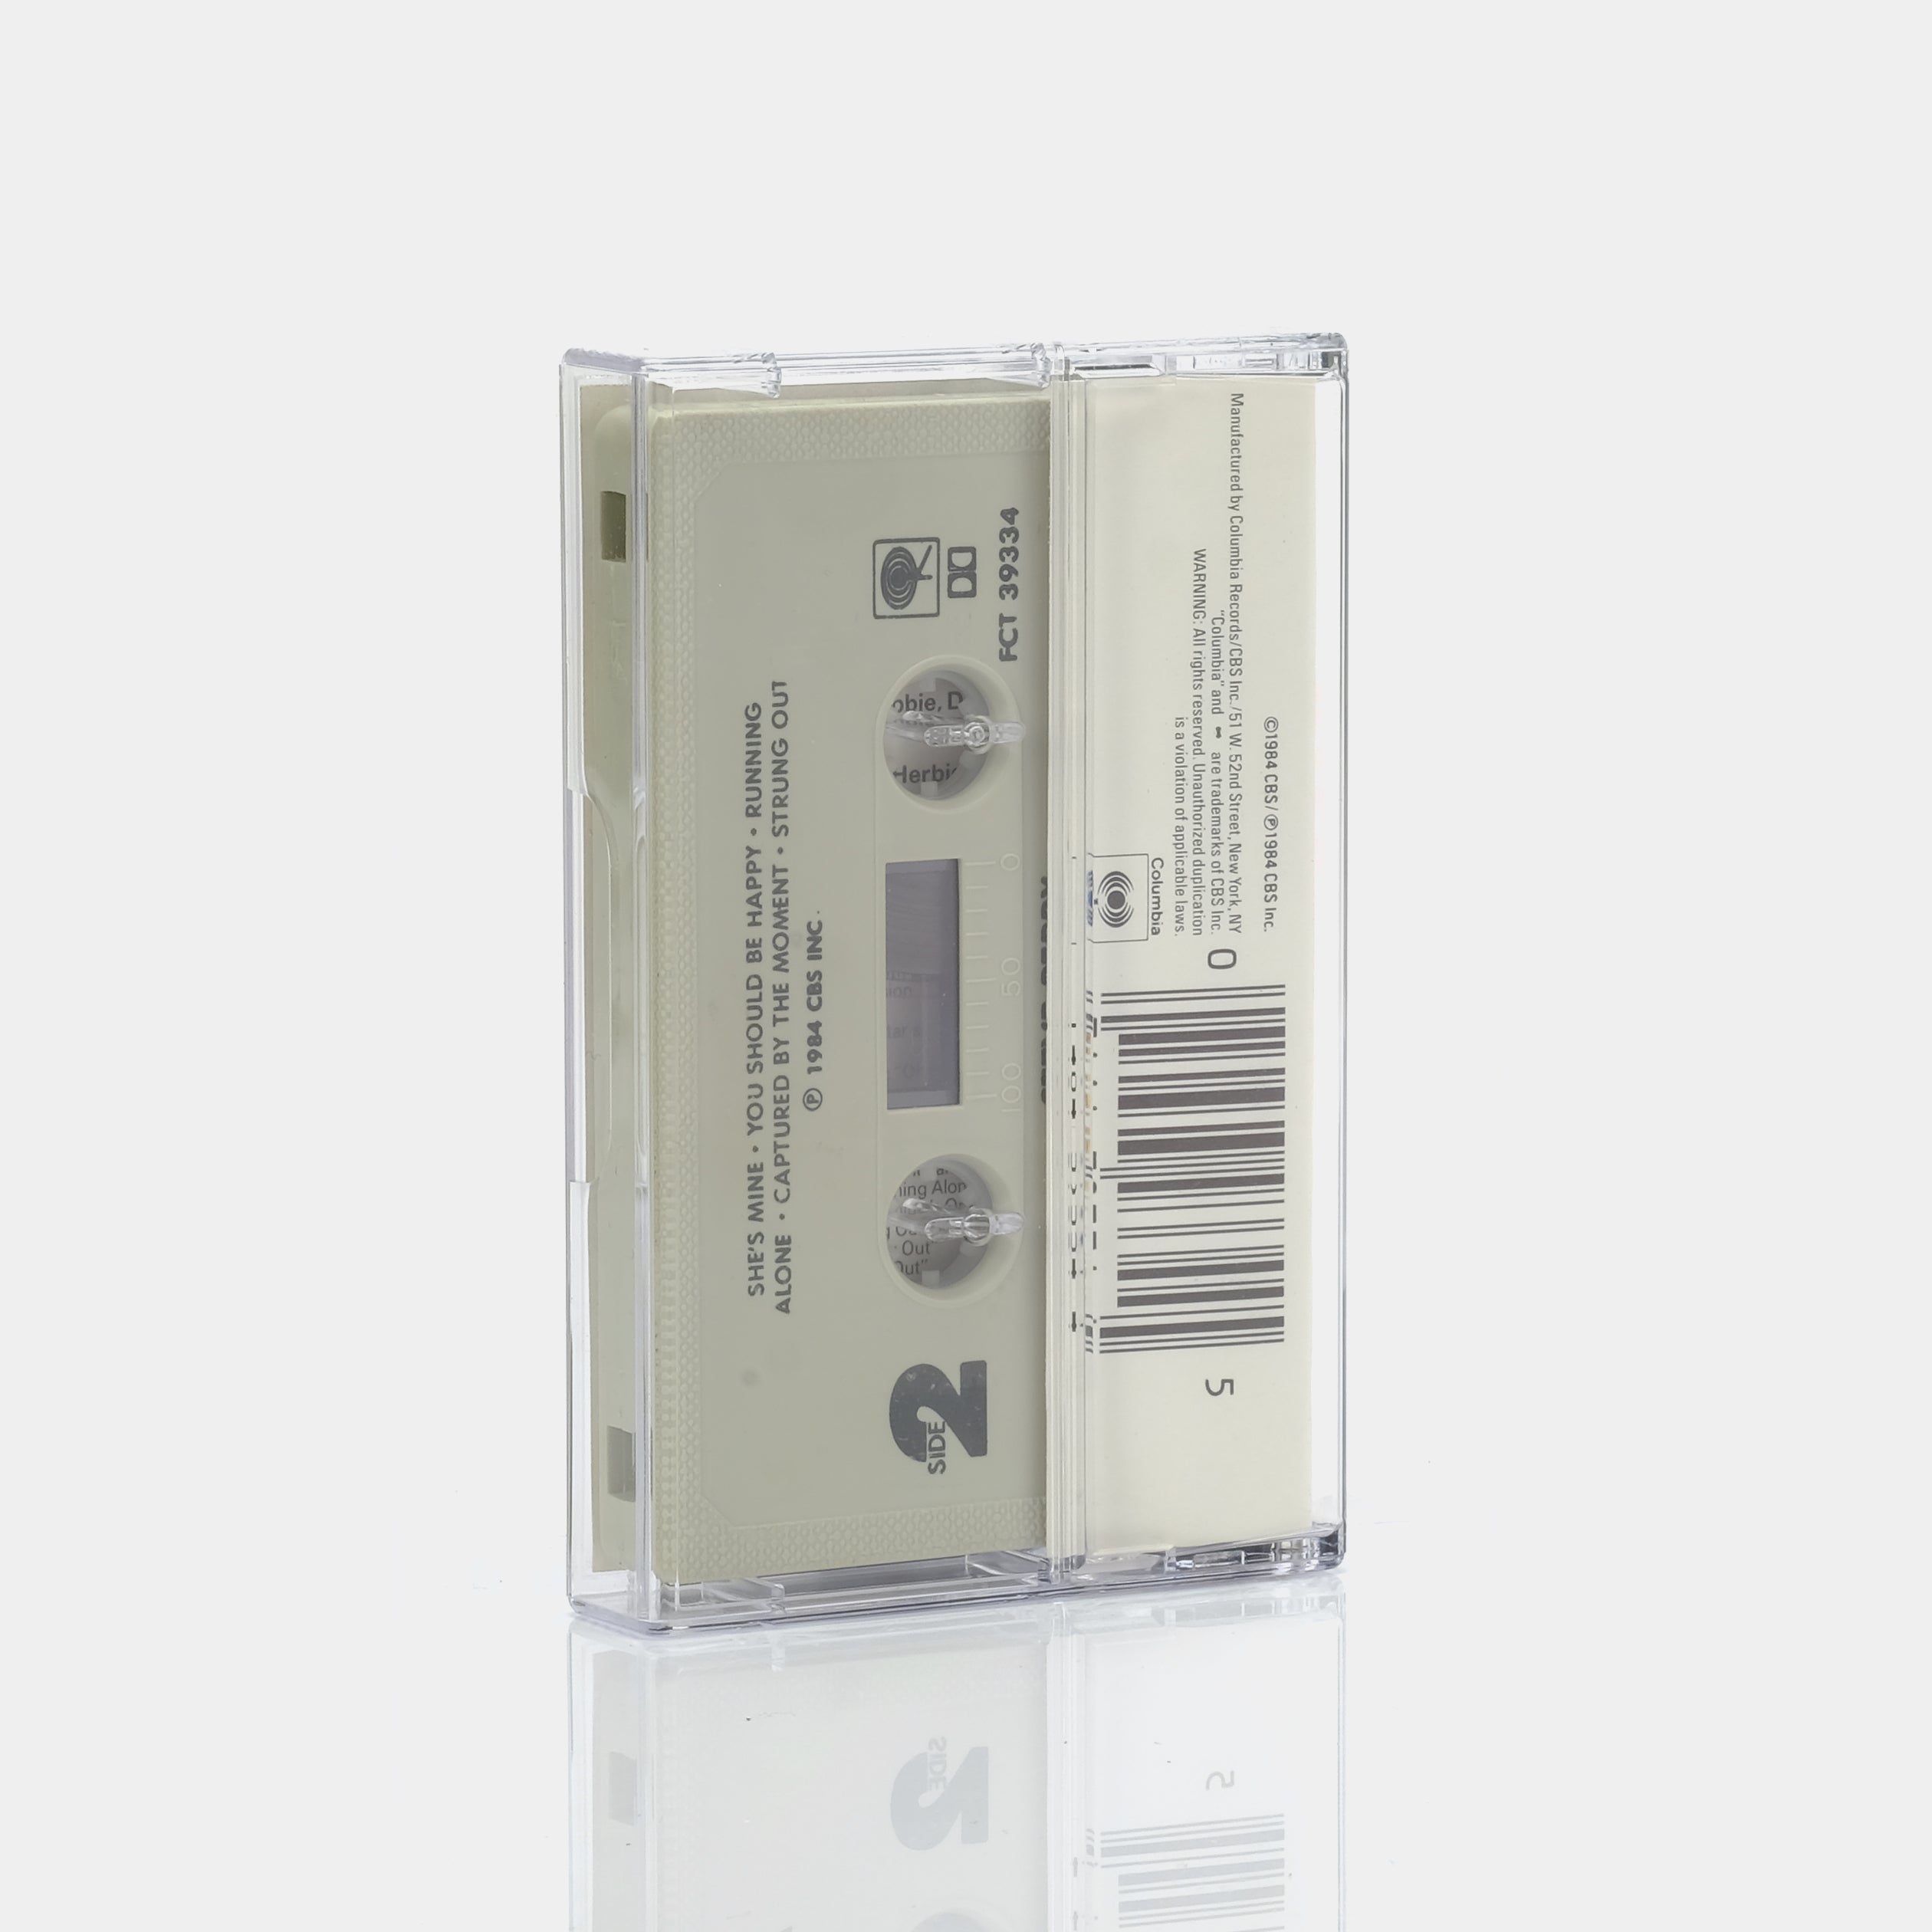 Steve Perry - Street Talk Cassette Tape